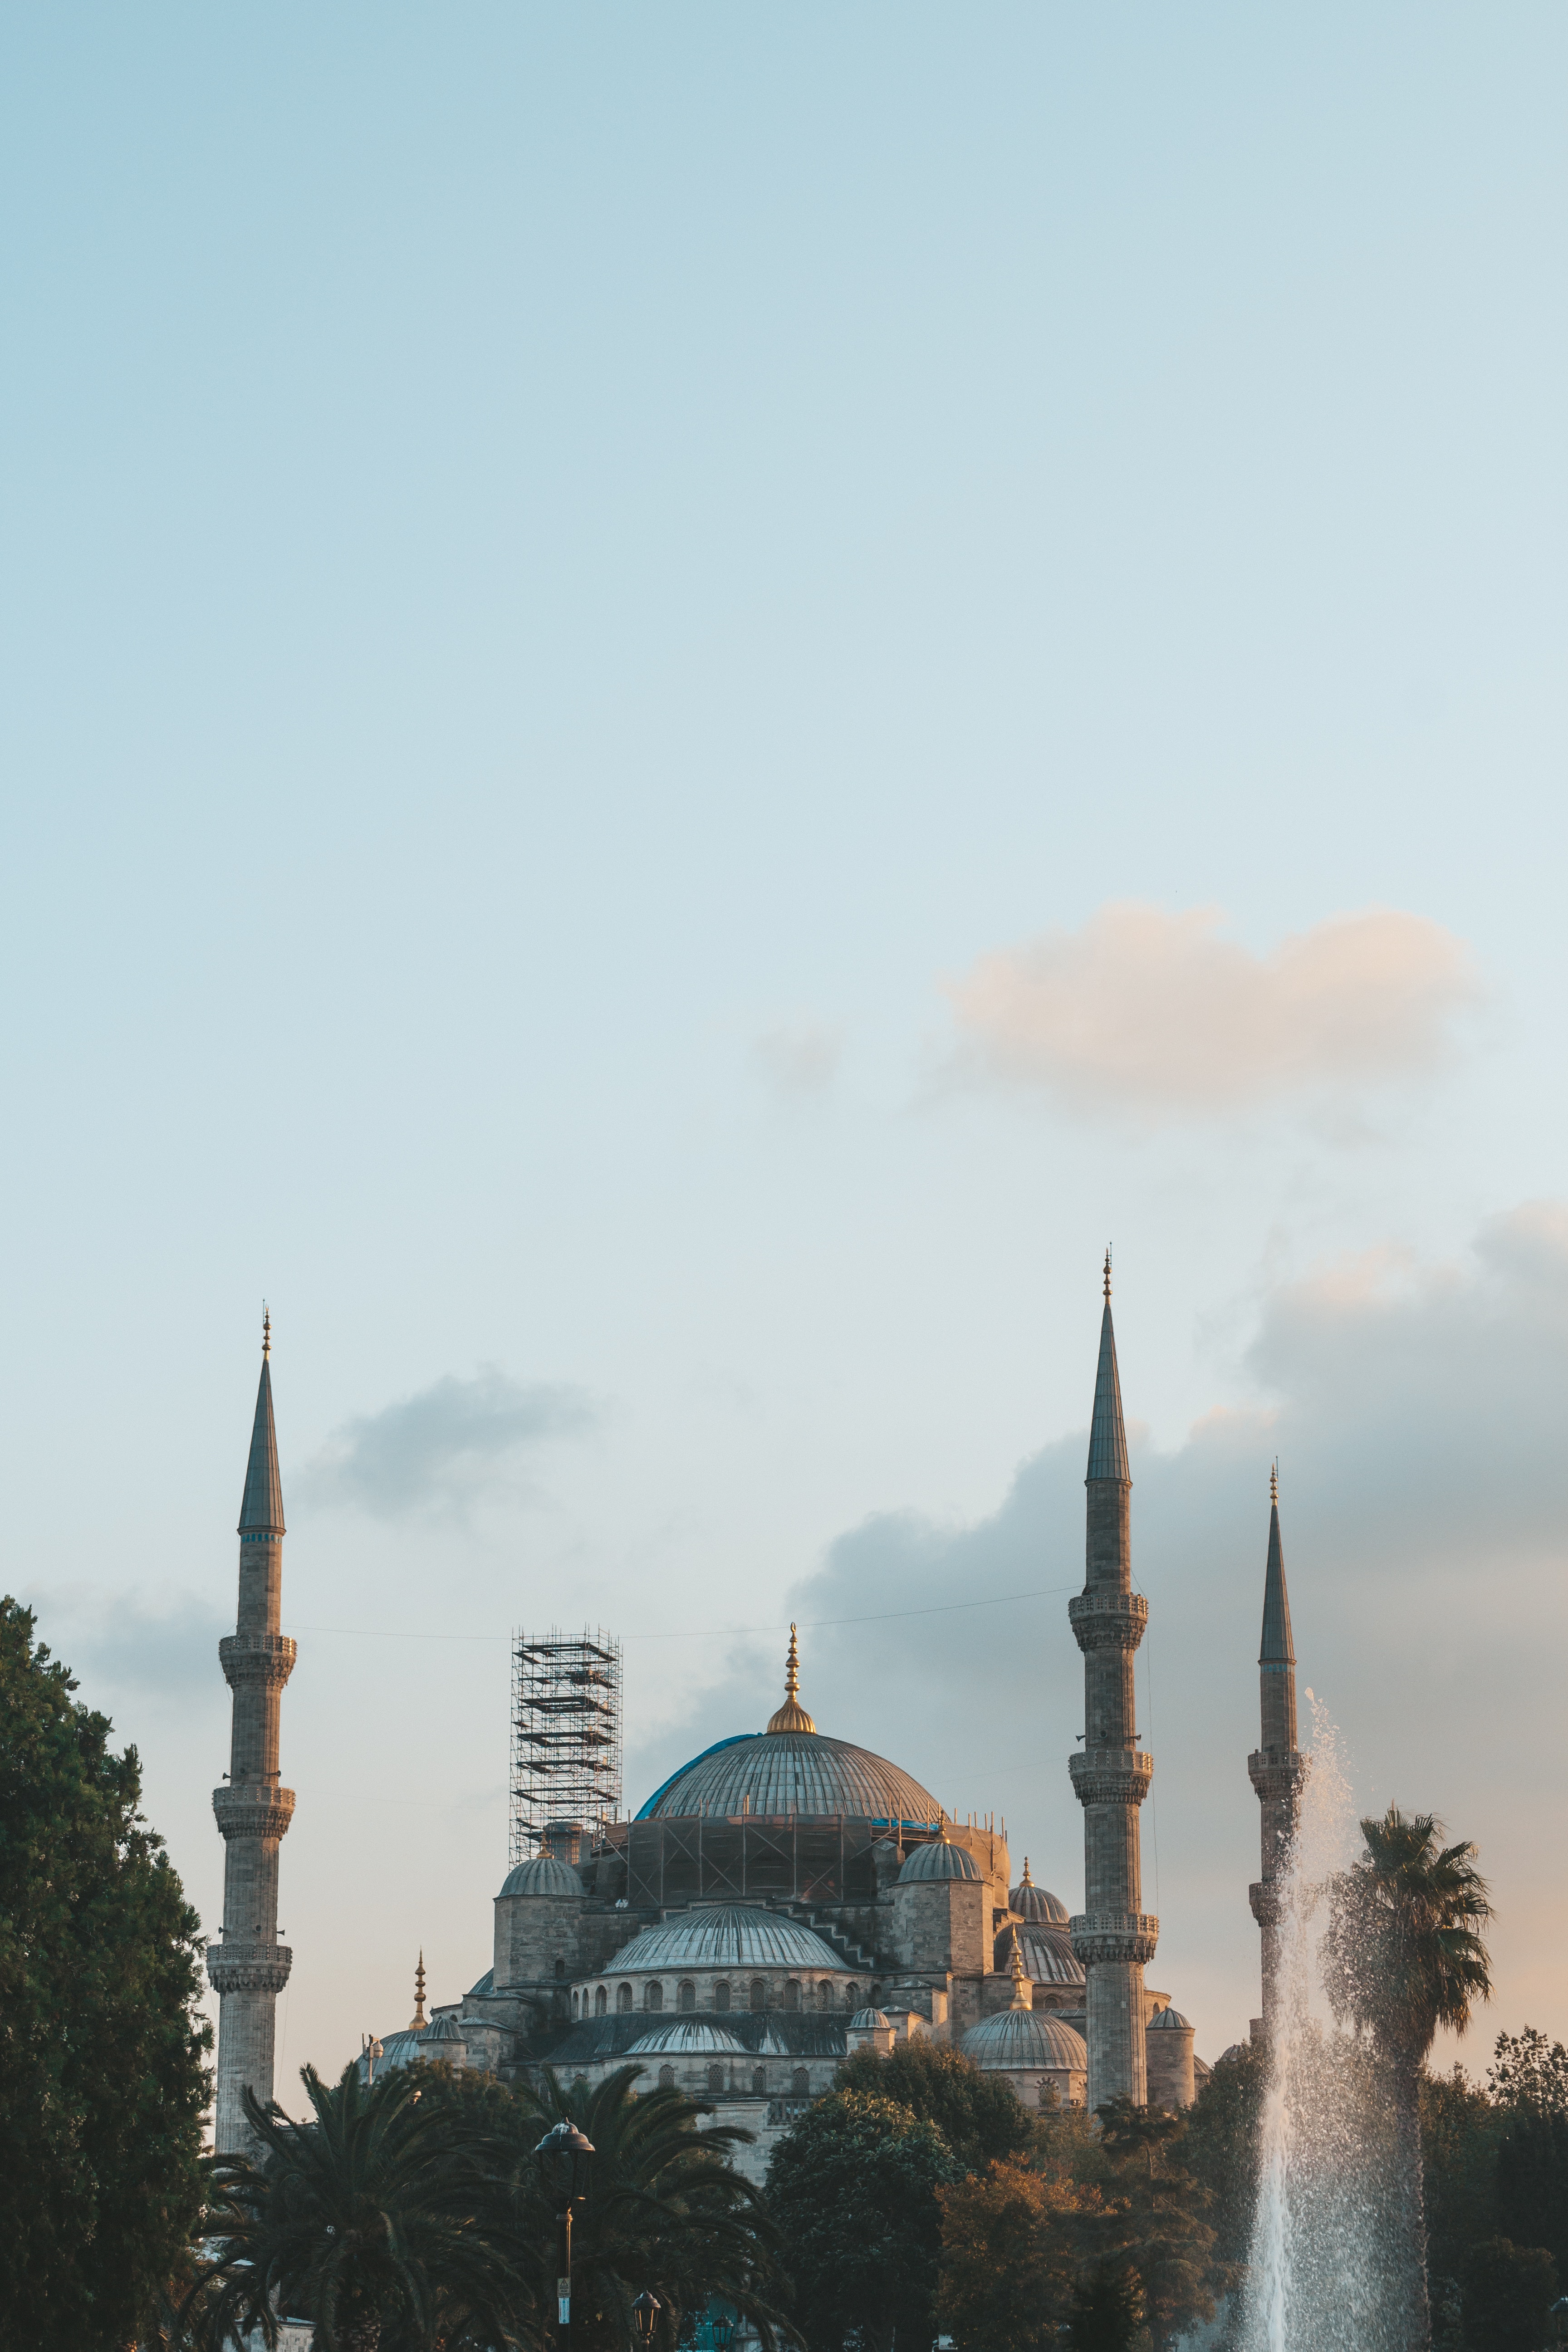 Best Mosque Photo · 100% Free Downloads